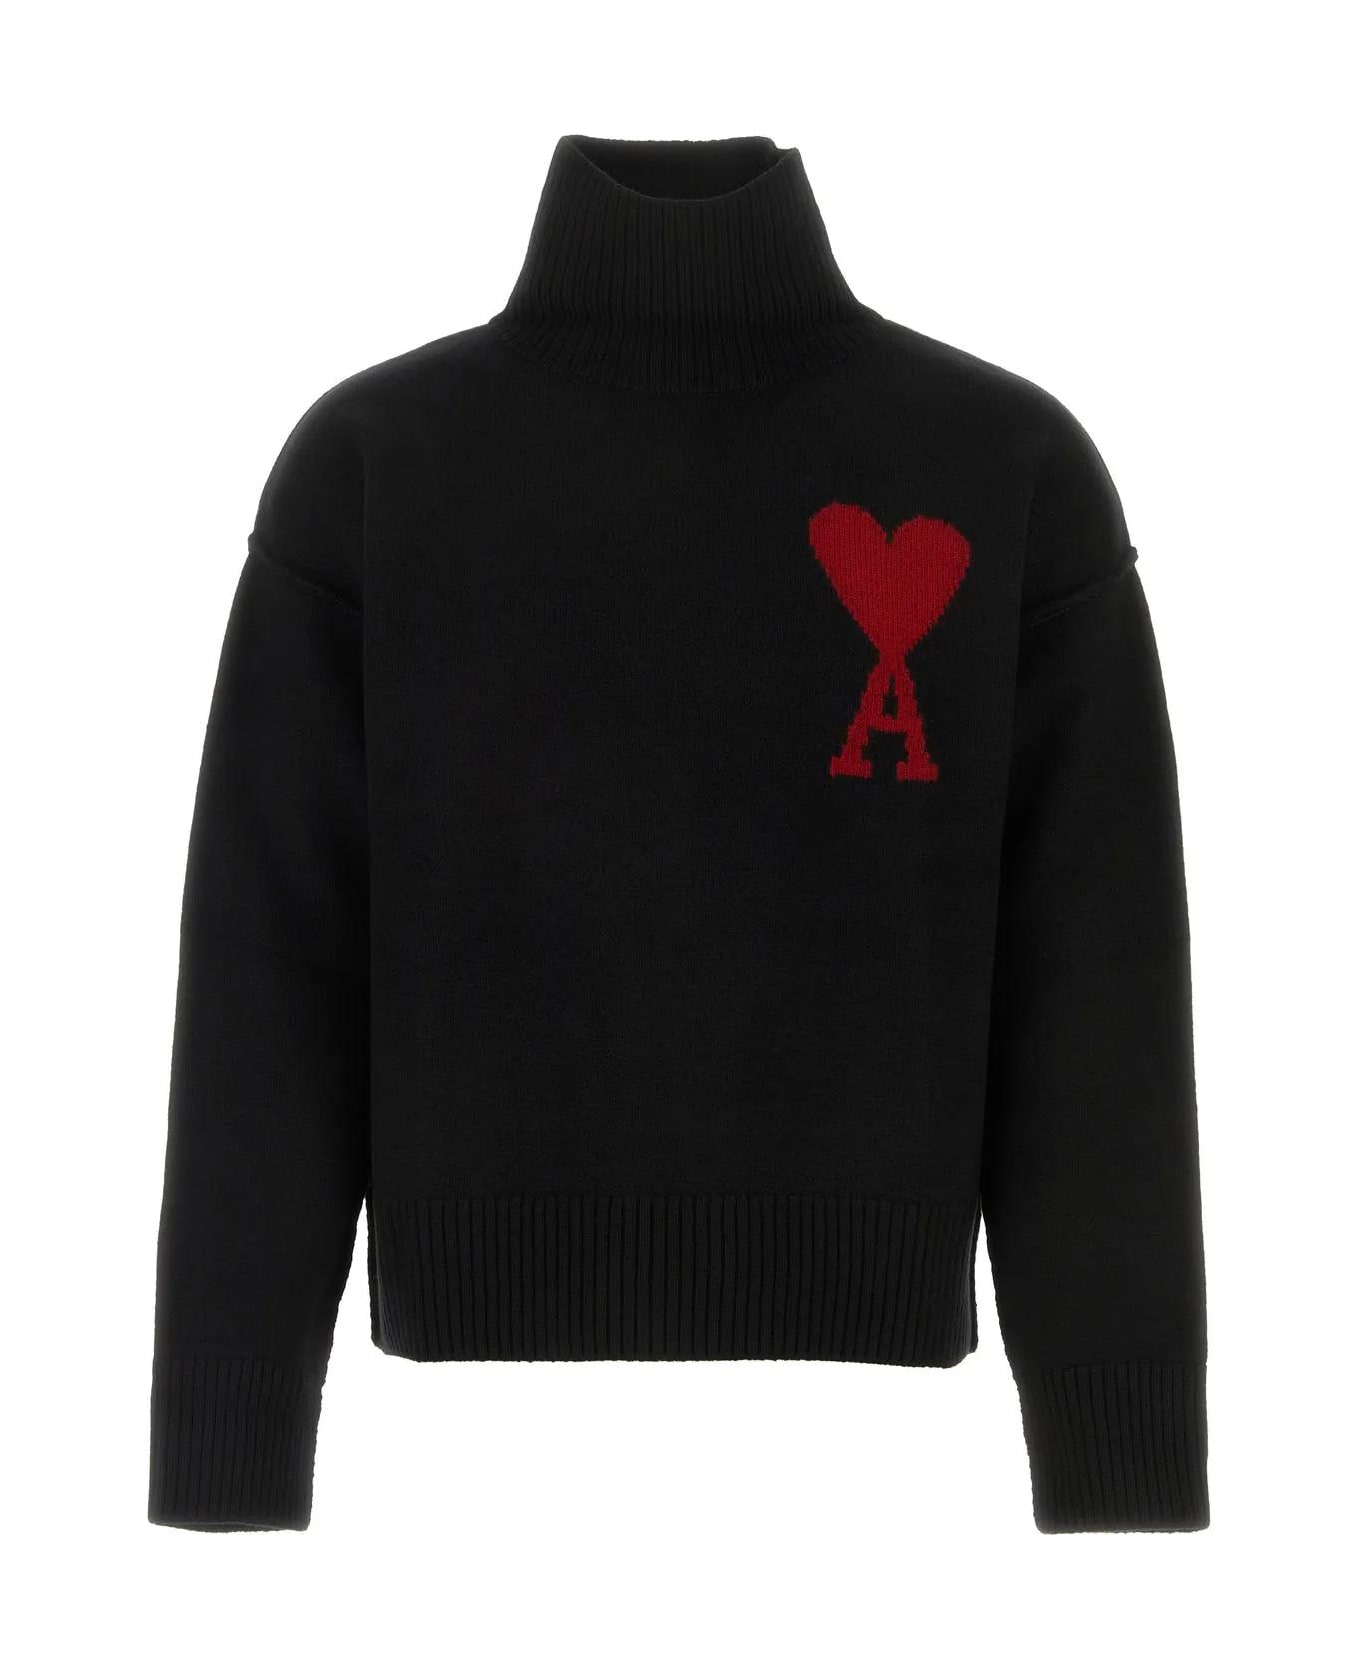 Ami Alexandre Mattiussi Black Wool Oversize Sweater - Black